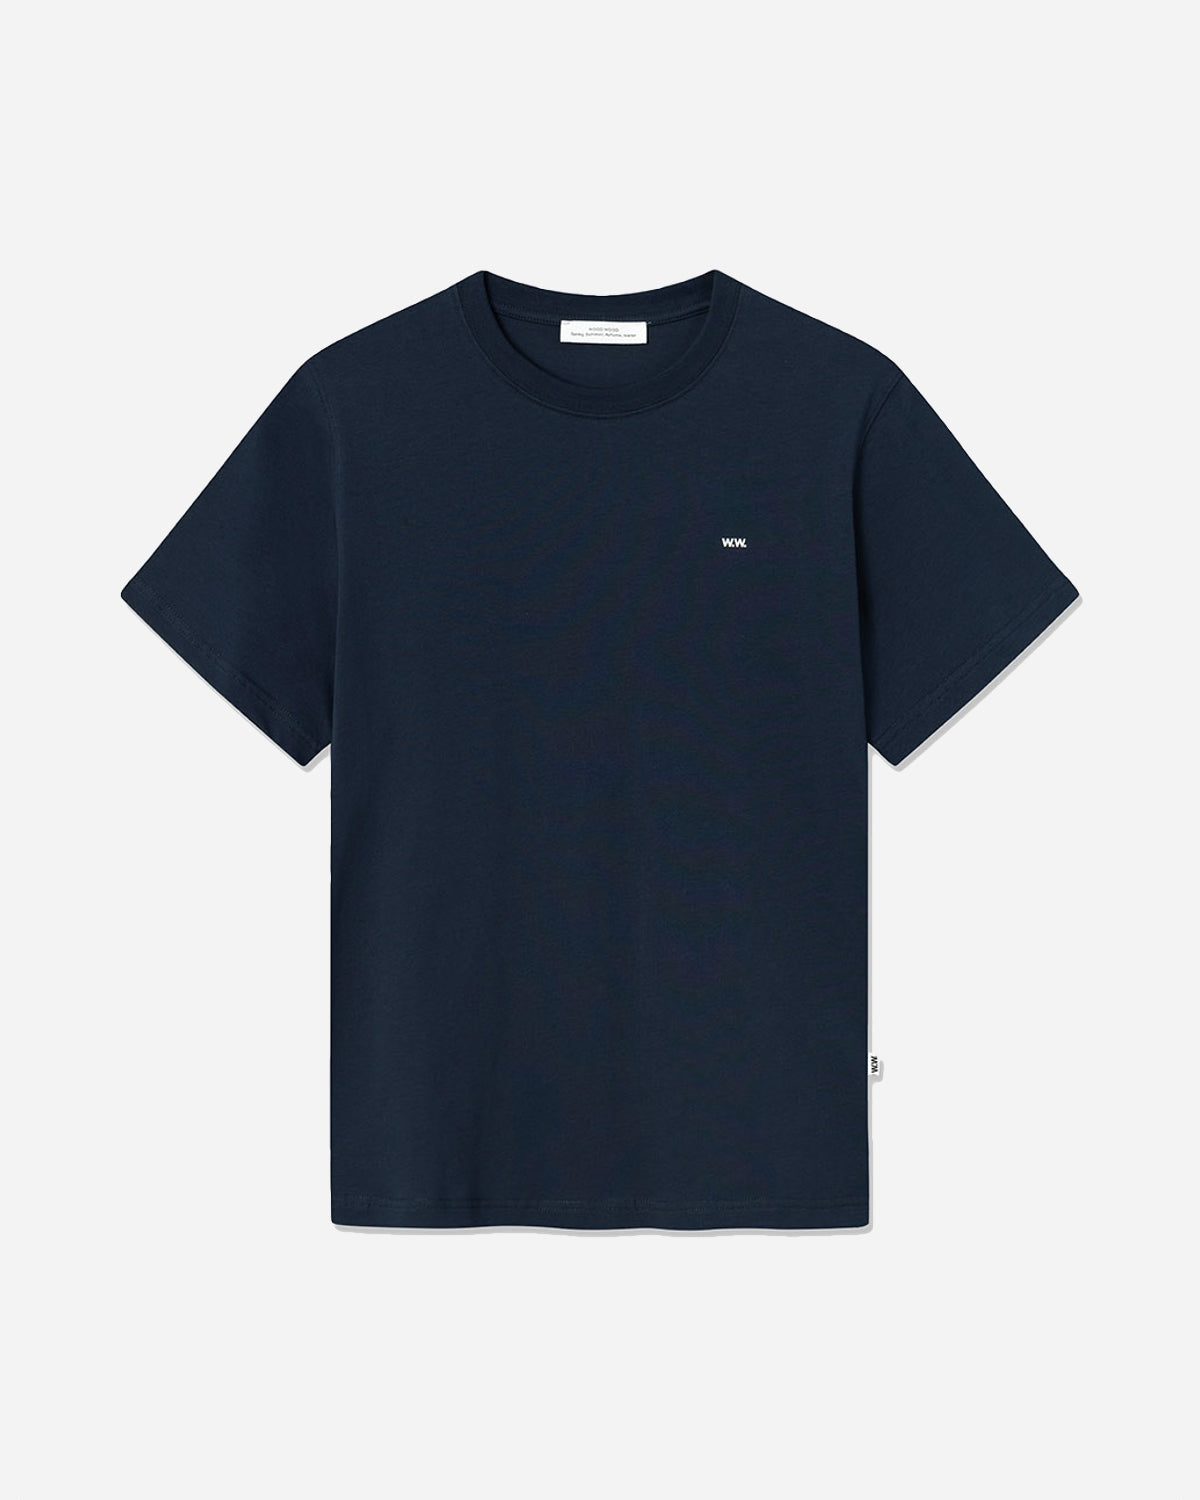 Essential Sami classic T-shirt - Navy